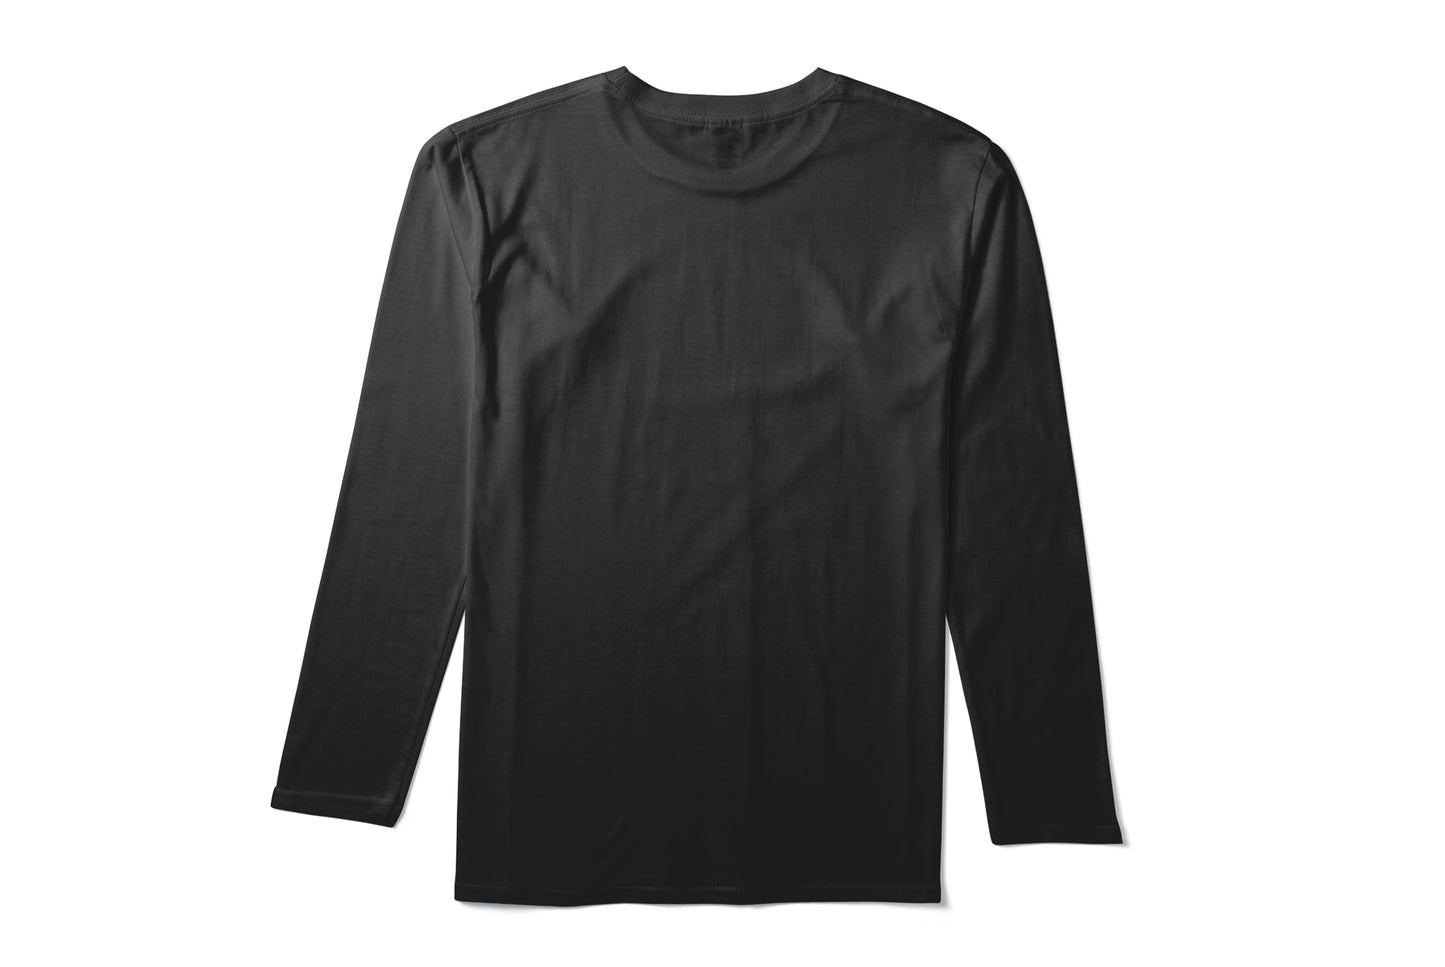 A-Bomb Shell Heat Transfer on Black Long Sleeve Shirt